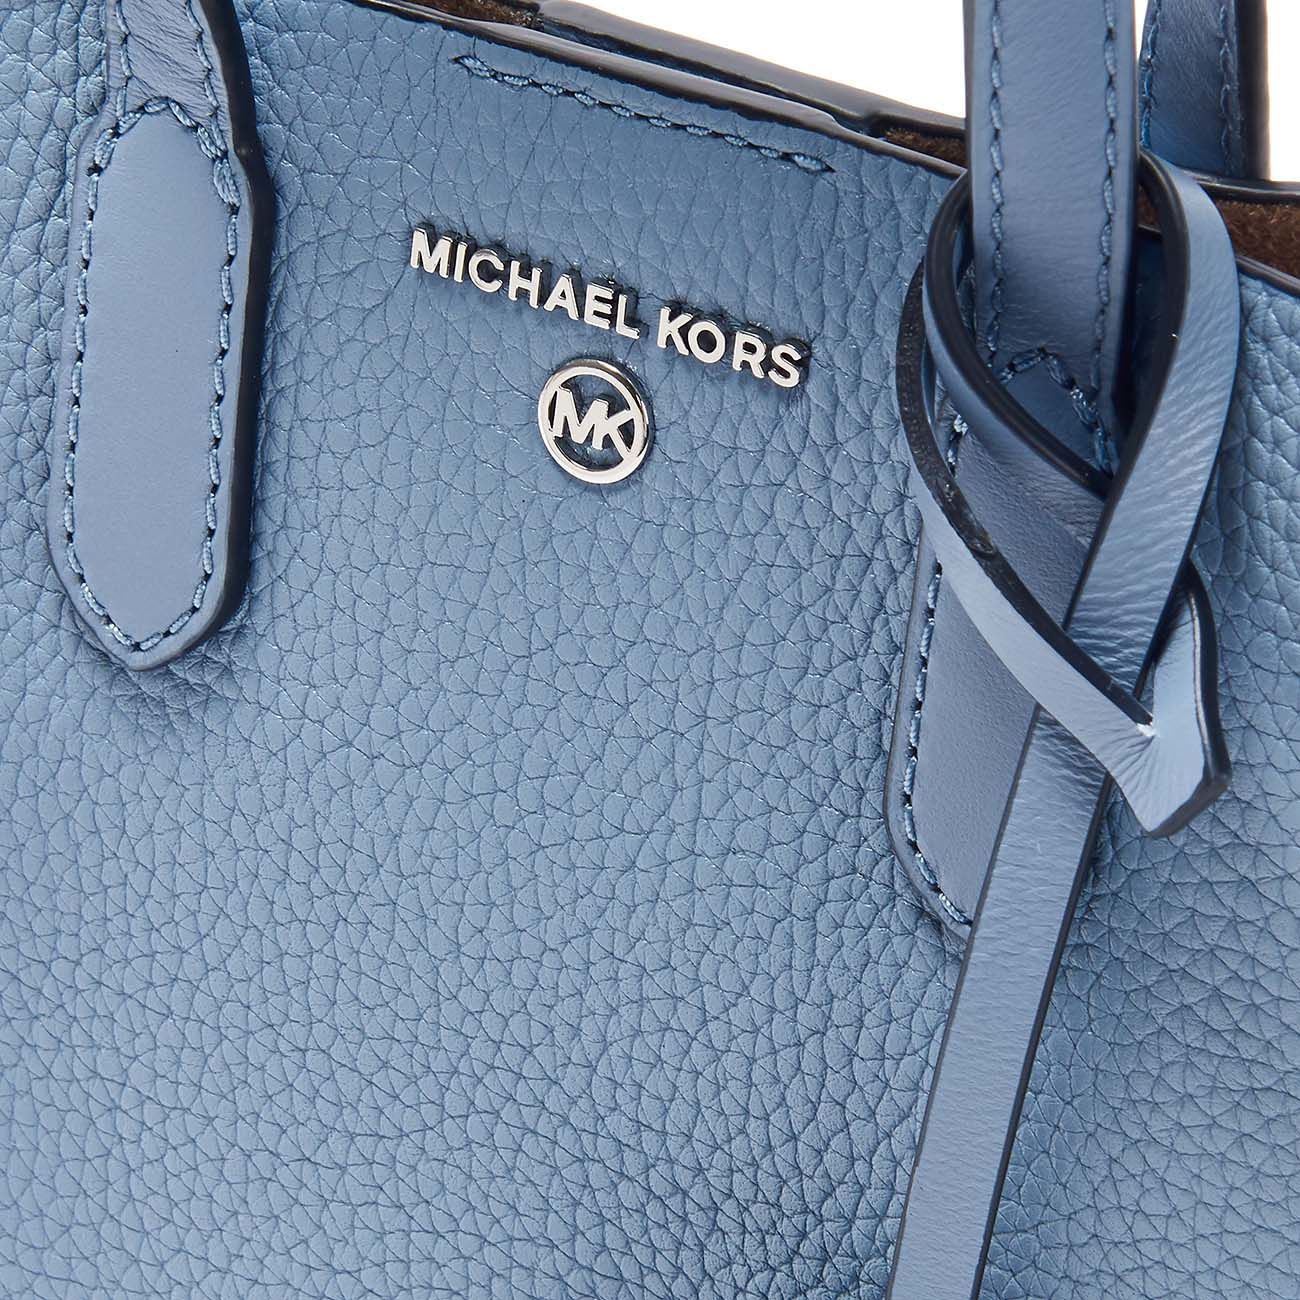 MICHAEL KORS SHOPPING BAG Woman | Mascheroni Store